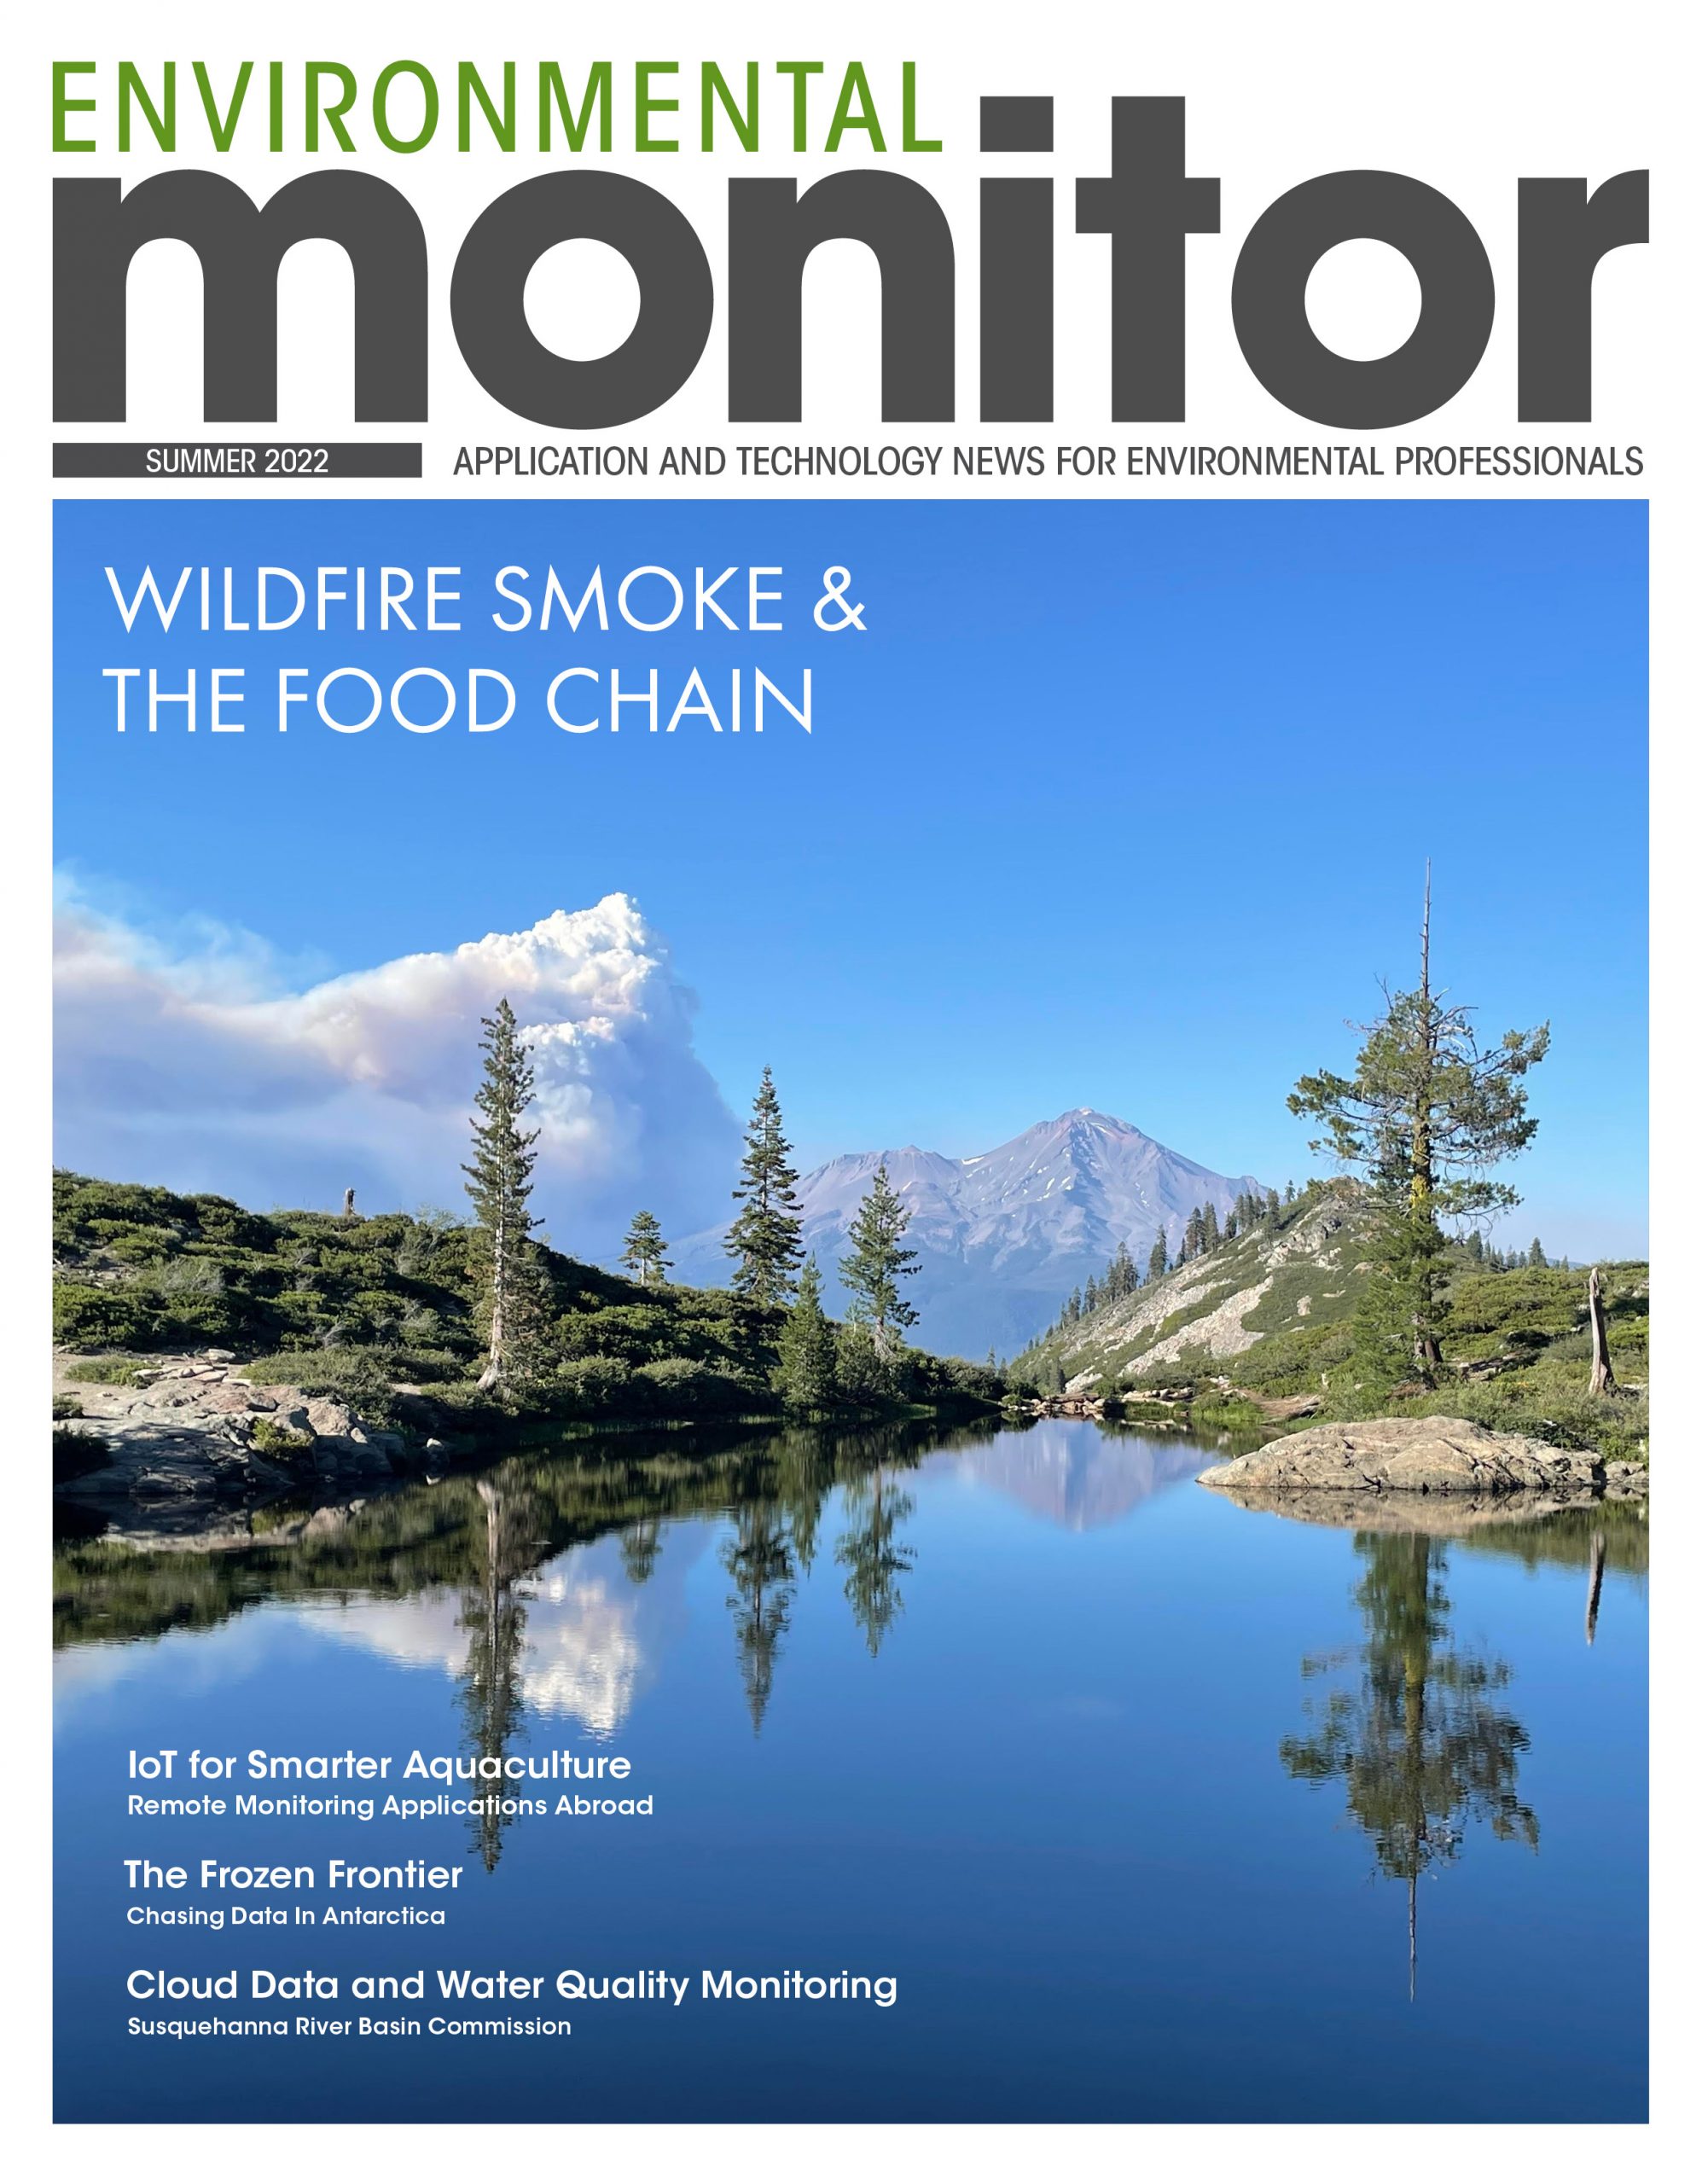 Environmental Monitor, Summer 2022 cover page